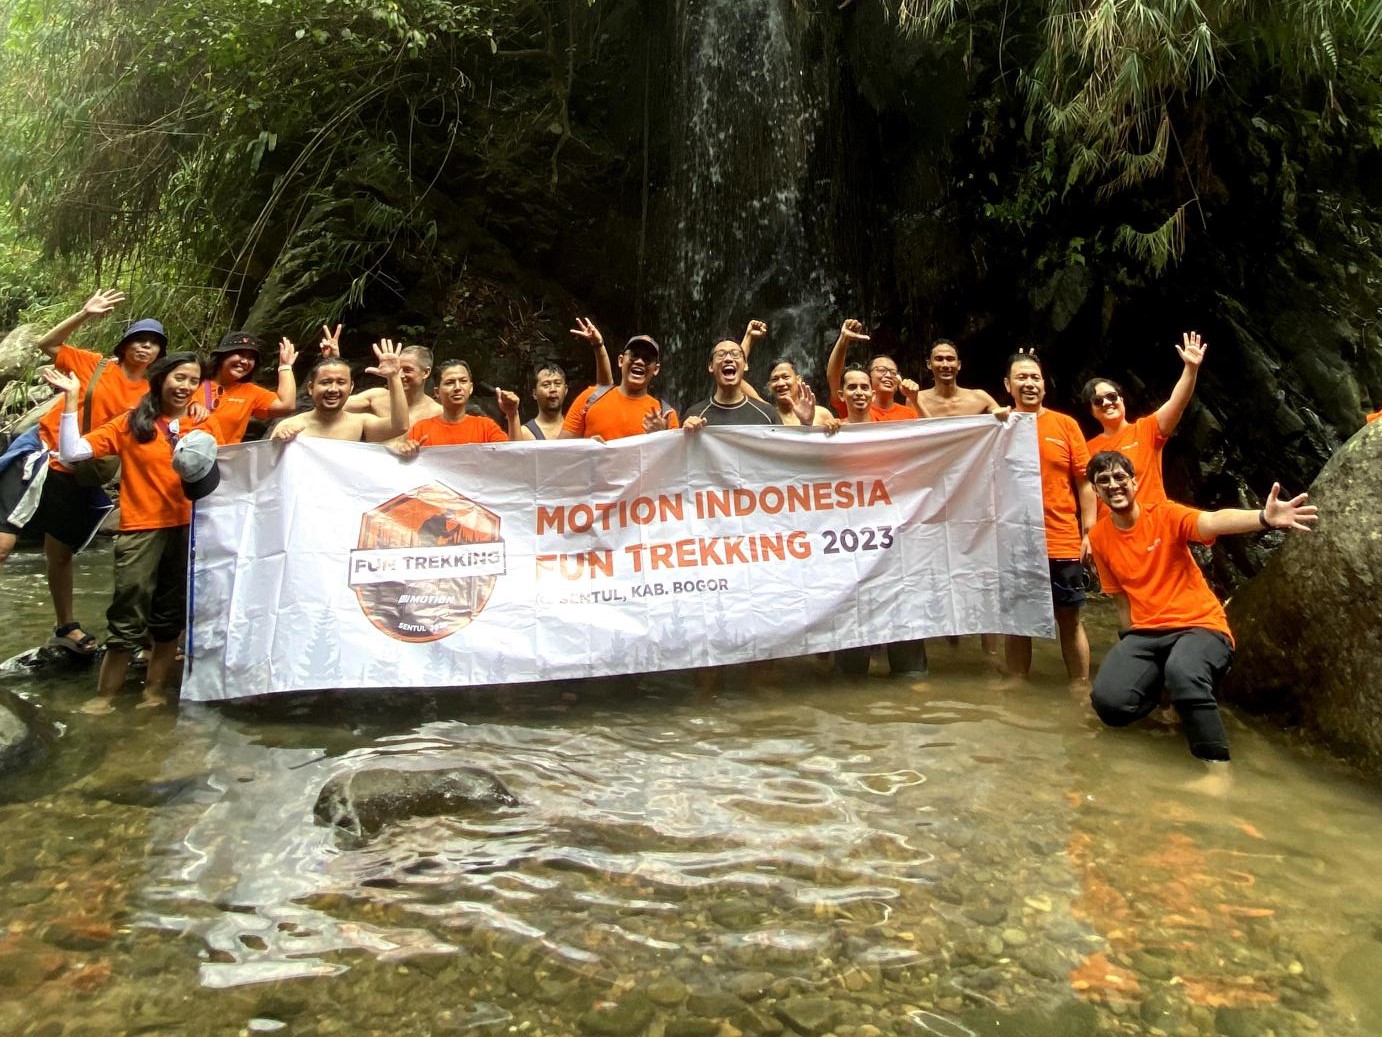 Motion Indonesia Fun Trekking 2023